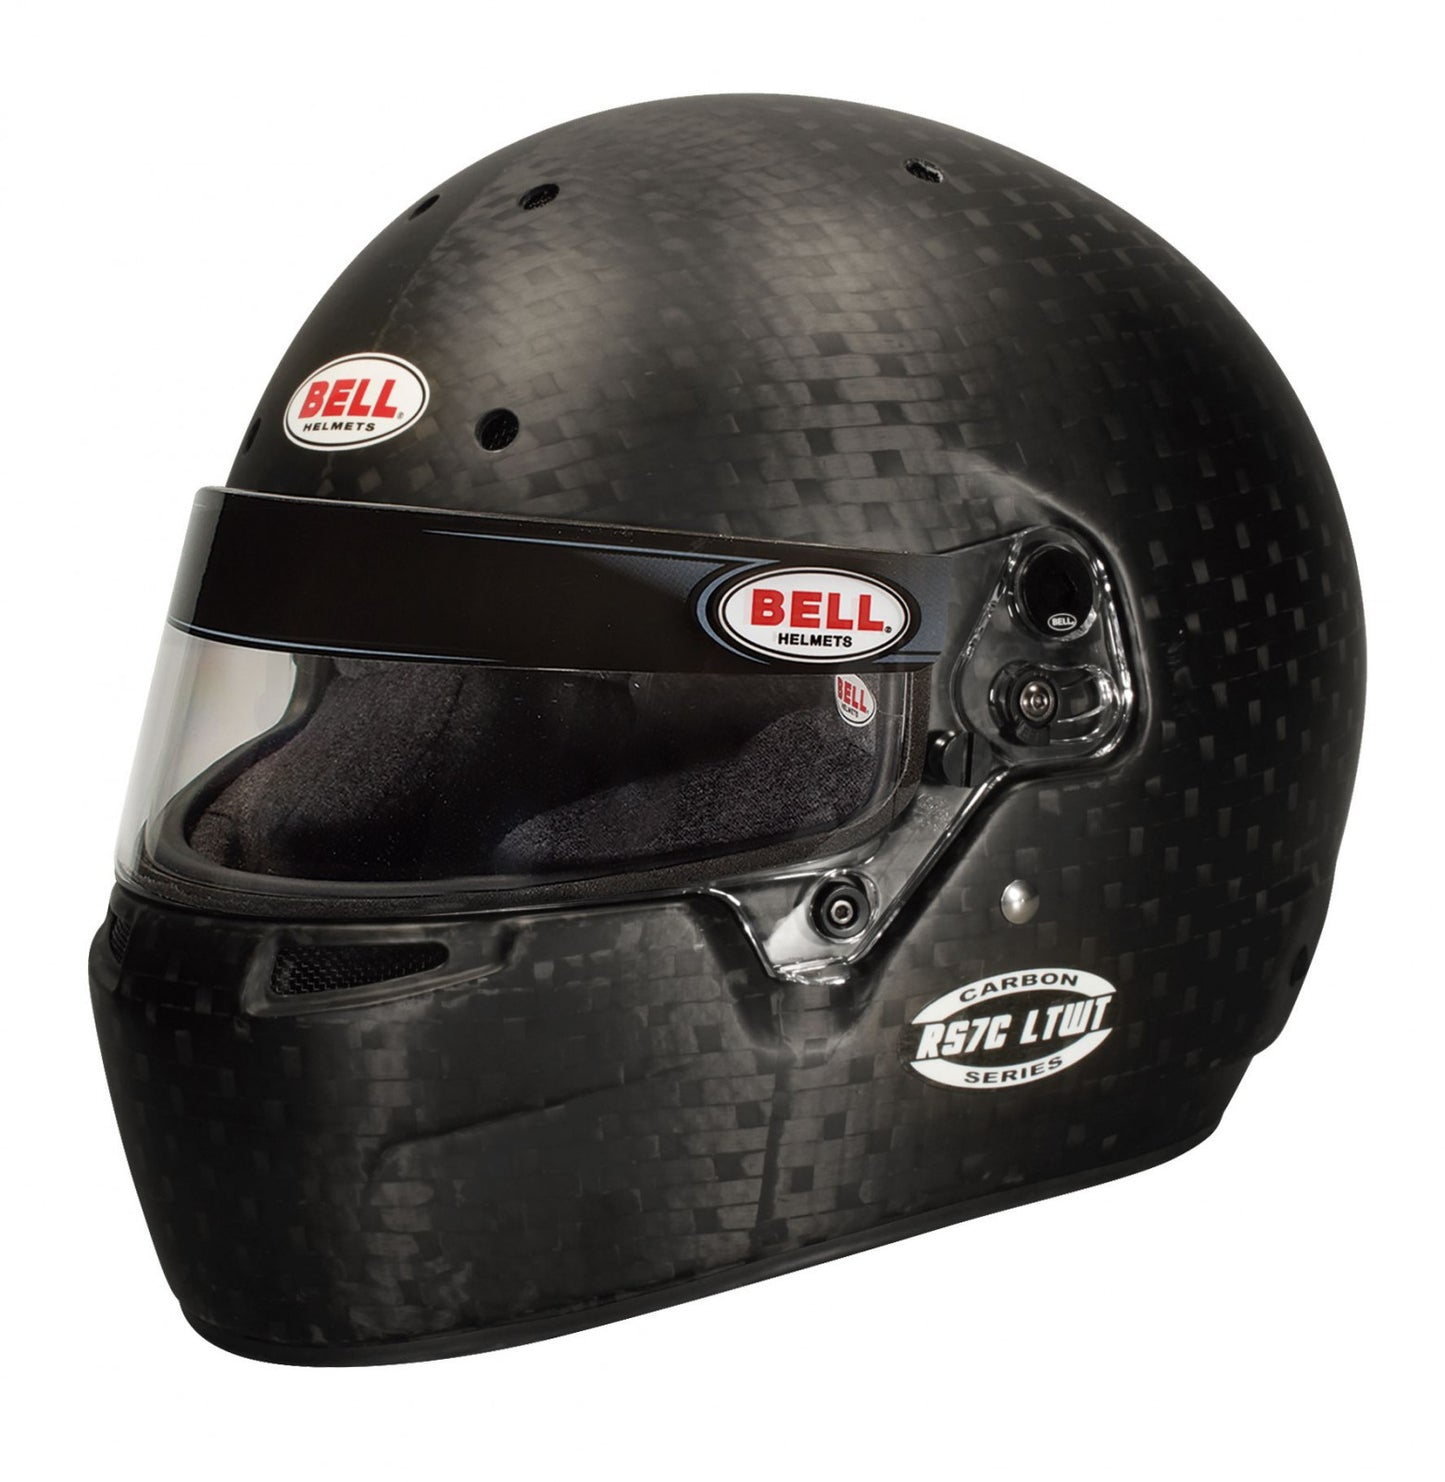 Bell Racing RS7C LTWT Helmet 7 3/8+ (59+ cm) 1237A09